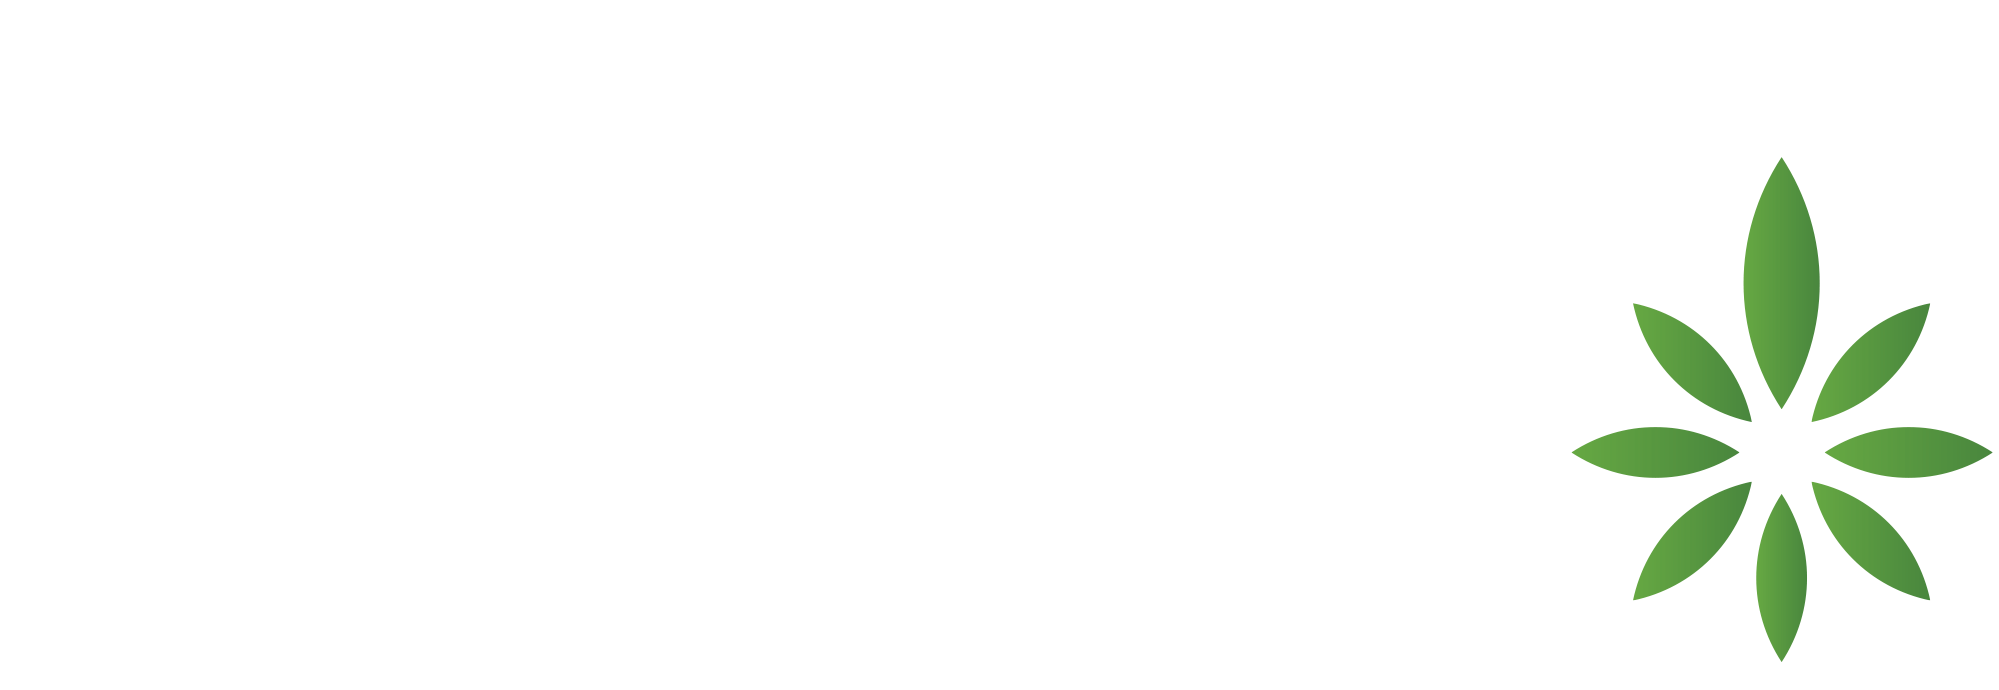 Harmony Outdoor Brands